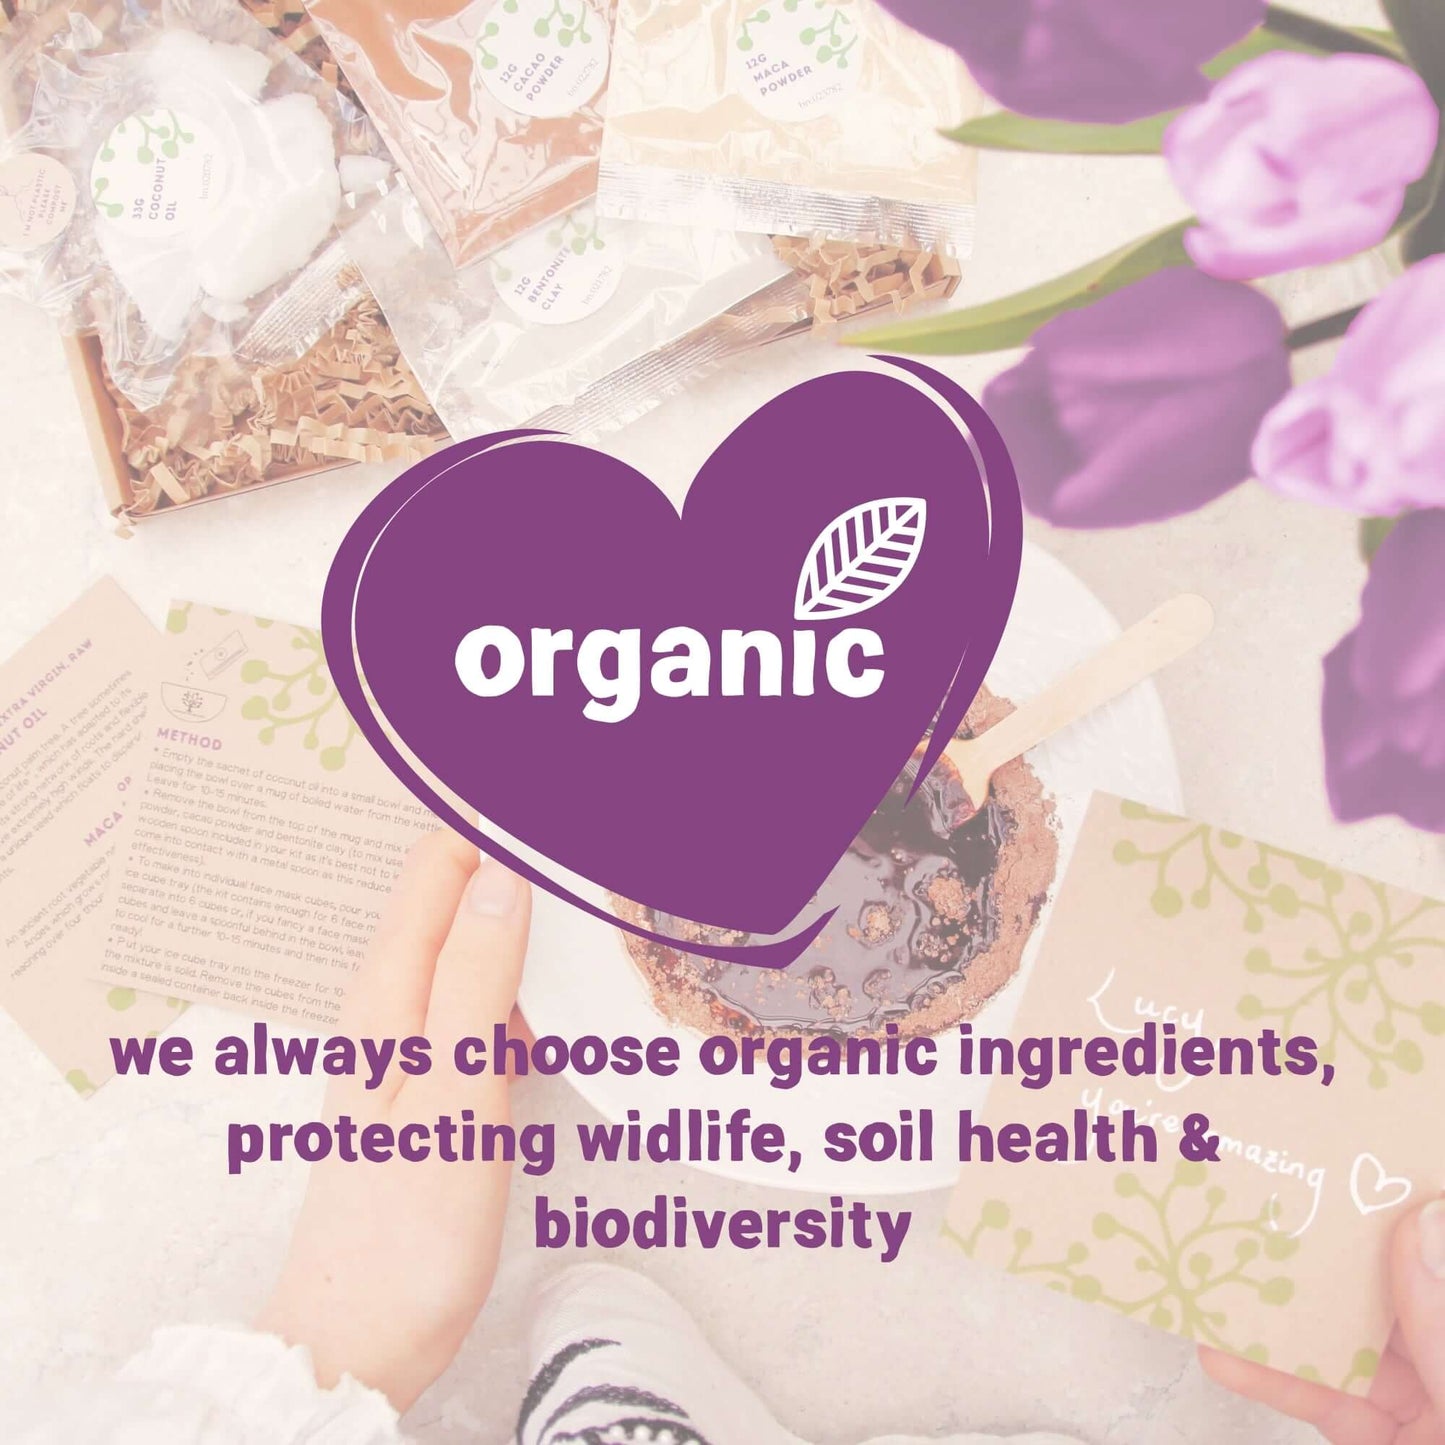 organic skincare kit inside proud of you gift box